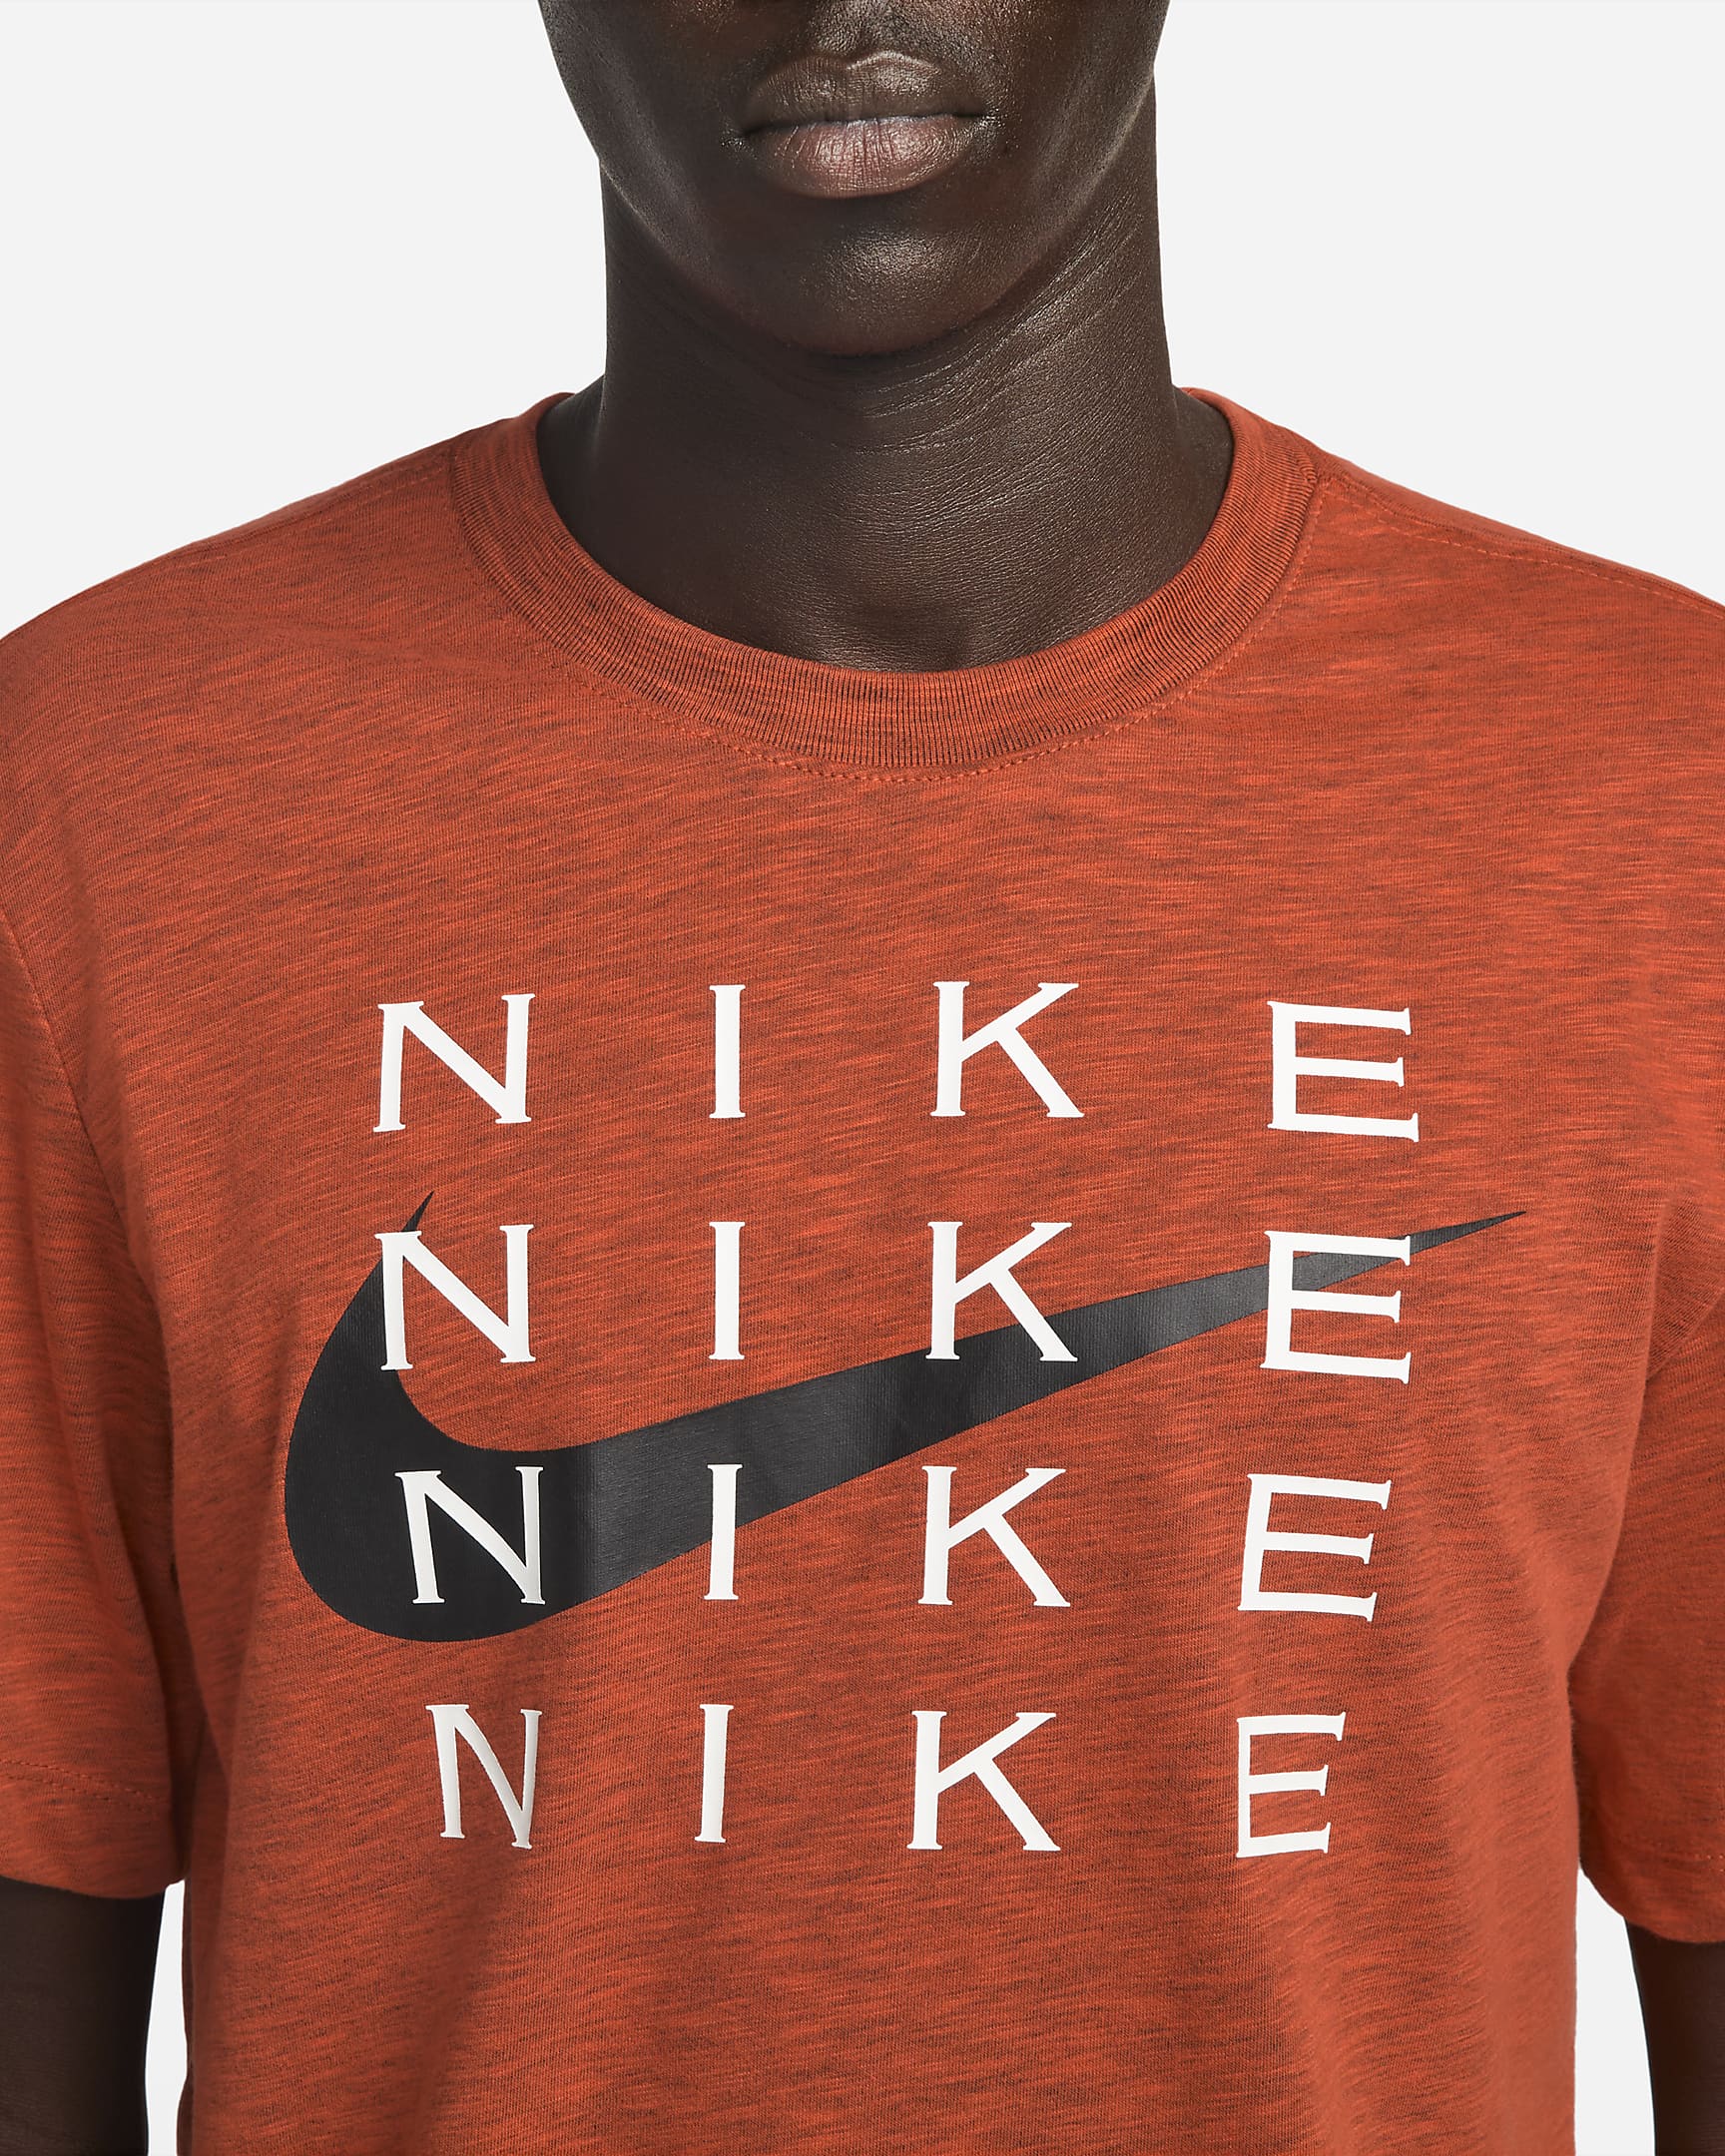 Nike Dri-FIT Men's Slub Training T-Shirt. Nike.com